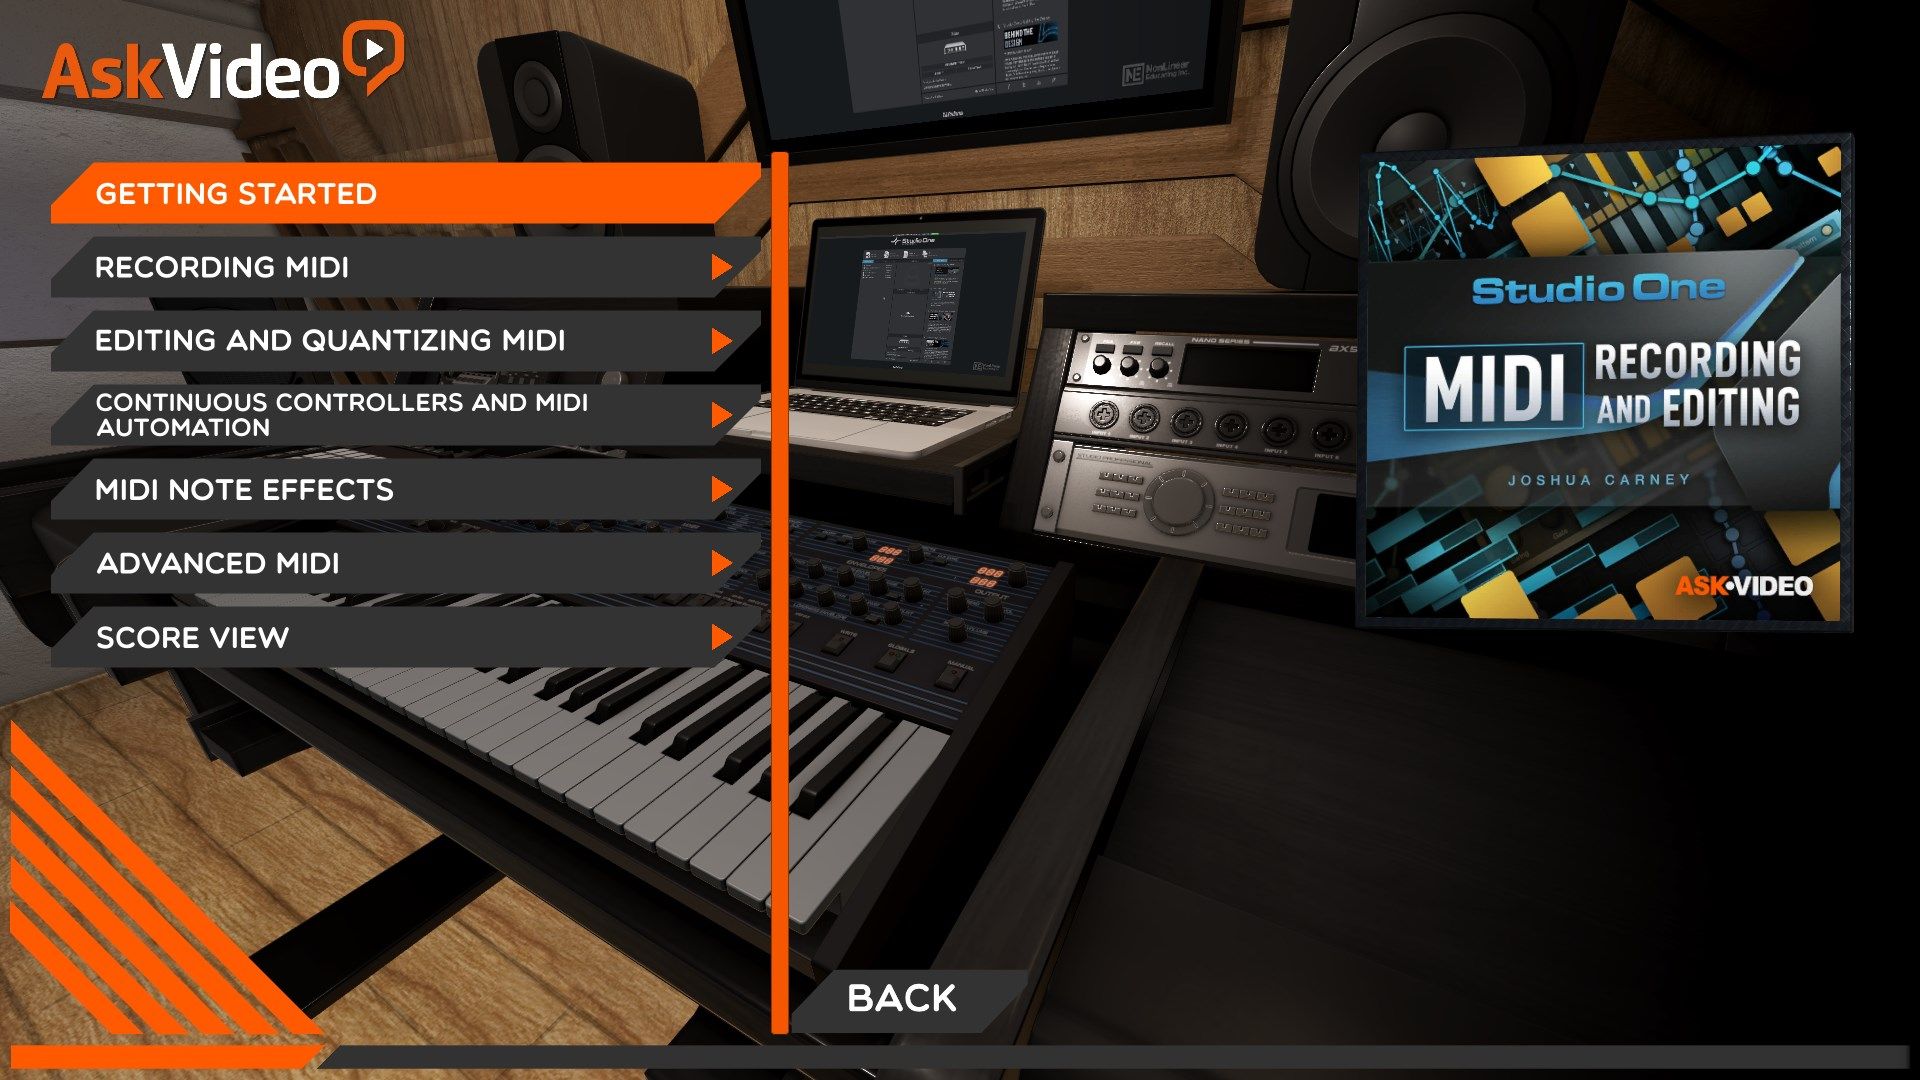 MIDI Recording and Editing Course for Studio One 5